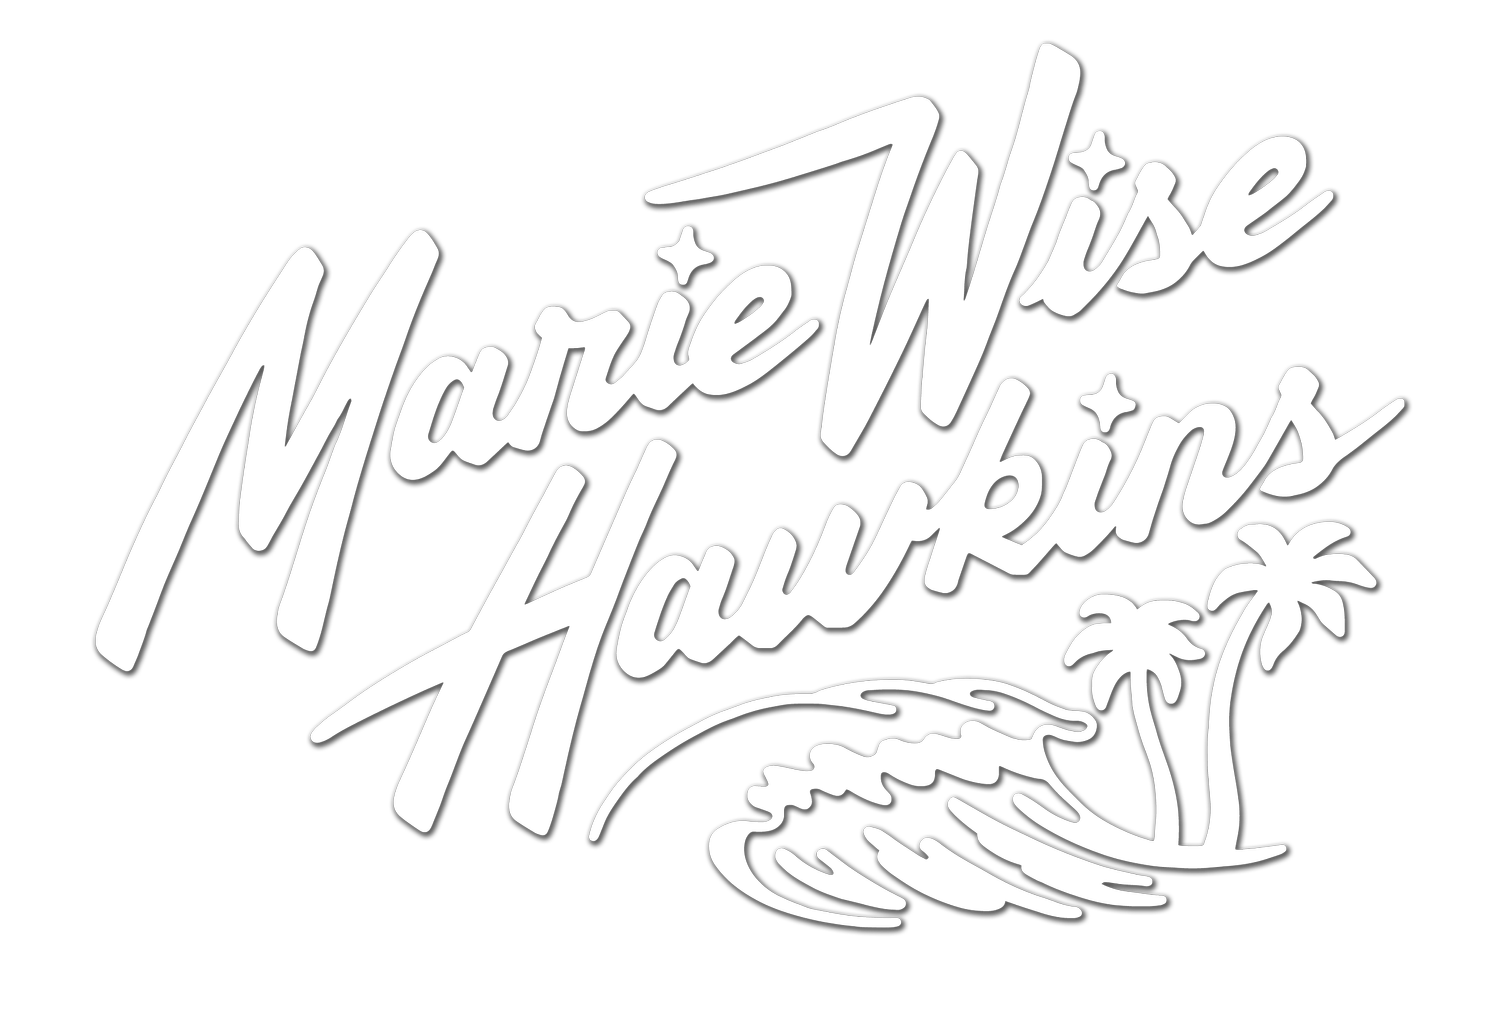 Marie Wise Hawkins